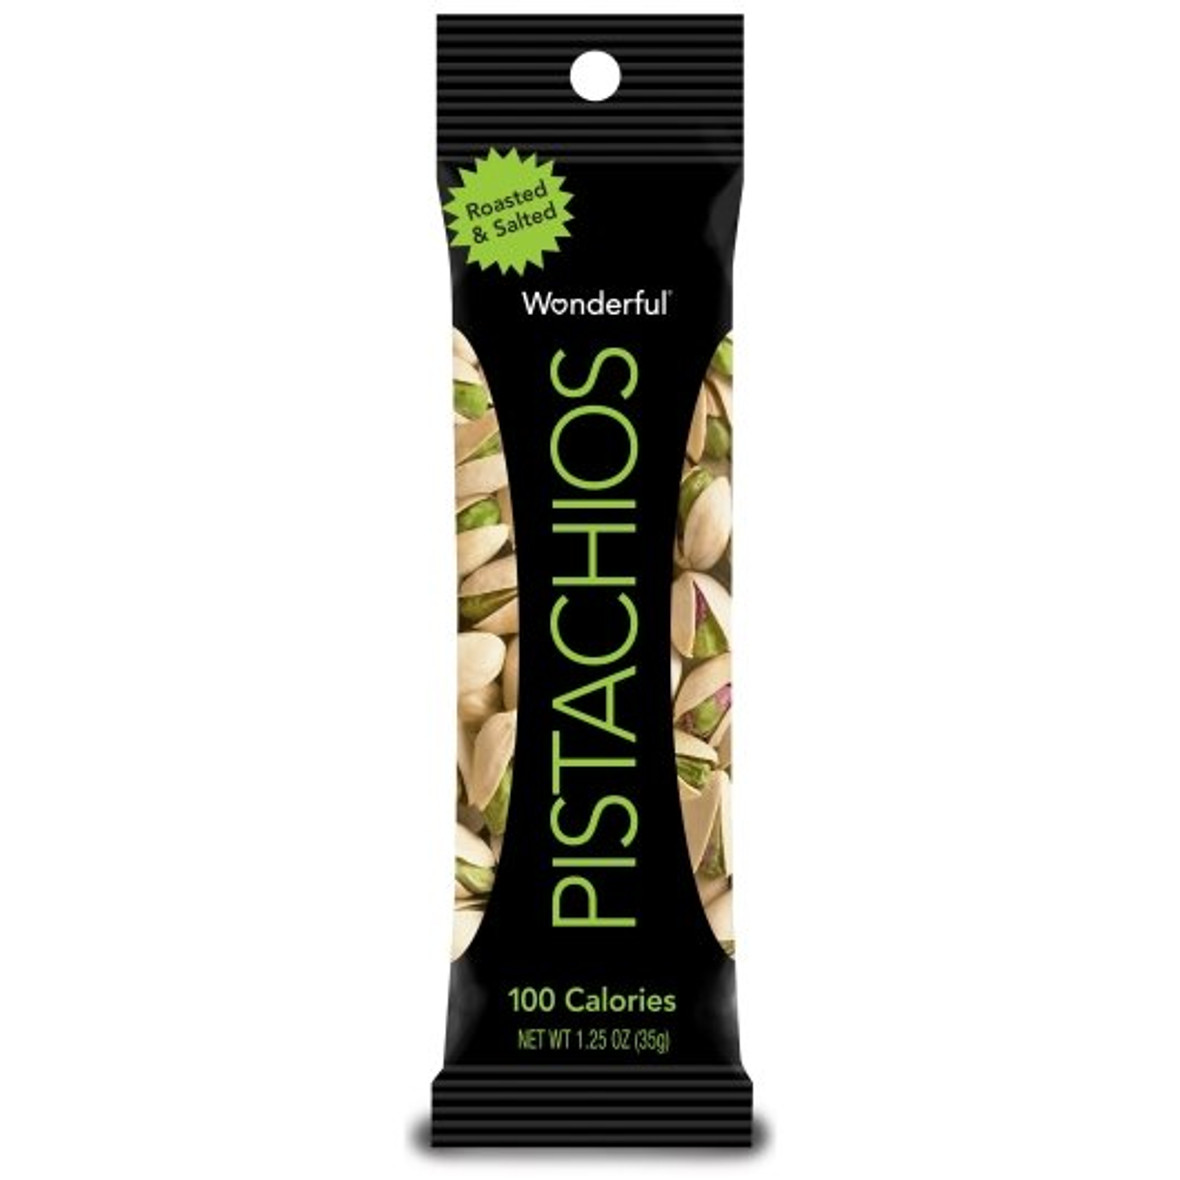 Wonderful Pistachios Roasted & Salted Pistachio Tube Pack, 1.25 Ounces, 12 Per Box, 10 Per Case